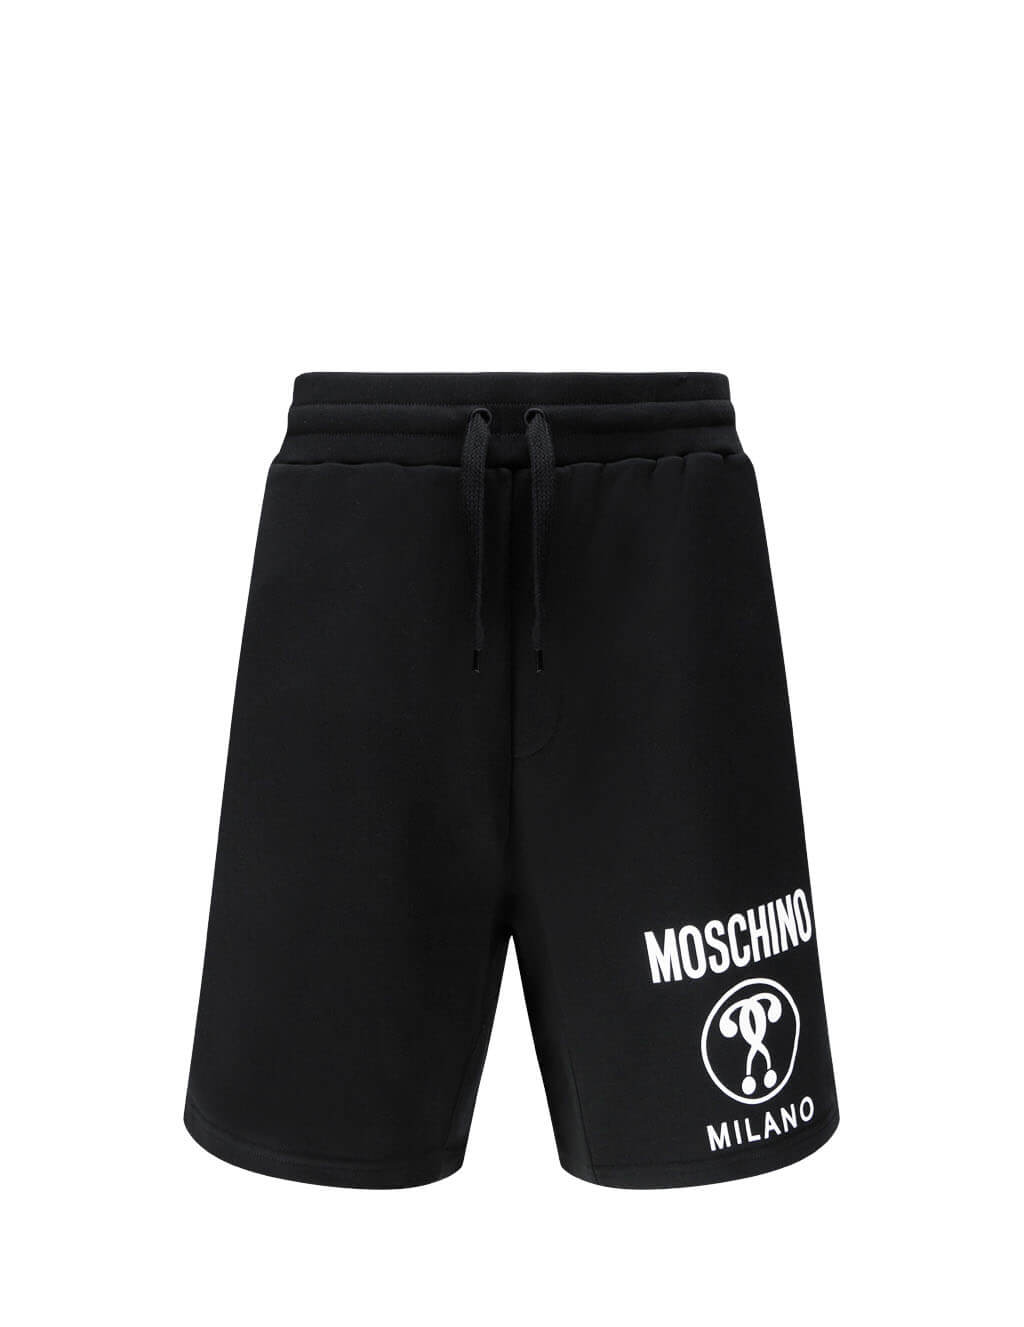 moschino shorts mens